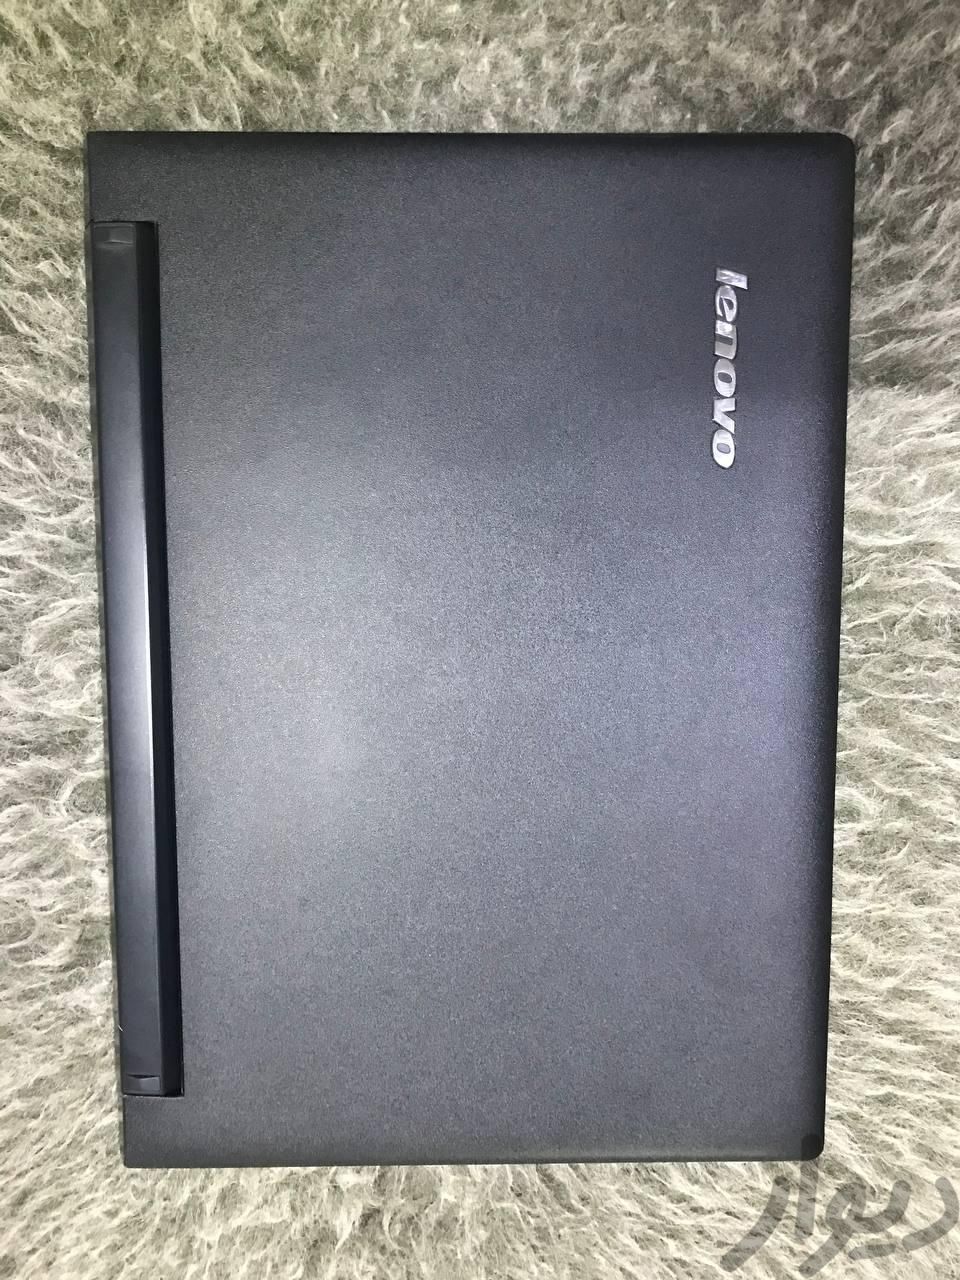 Lenovo flex 2 صفحه تمام لمسی|رایانه همراه|رشت, لاکانی|دیوار